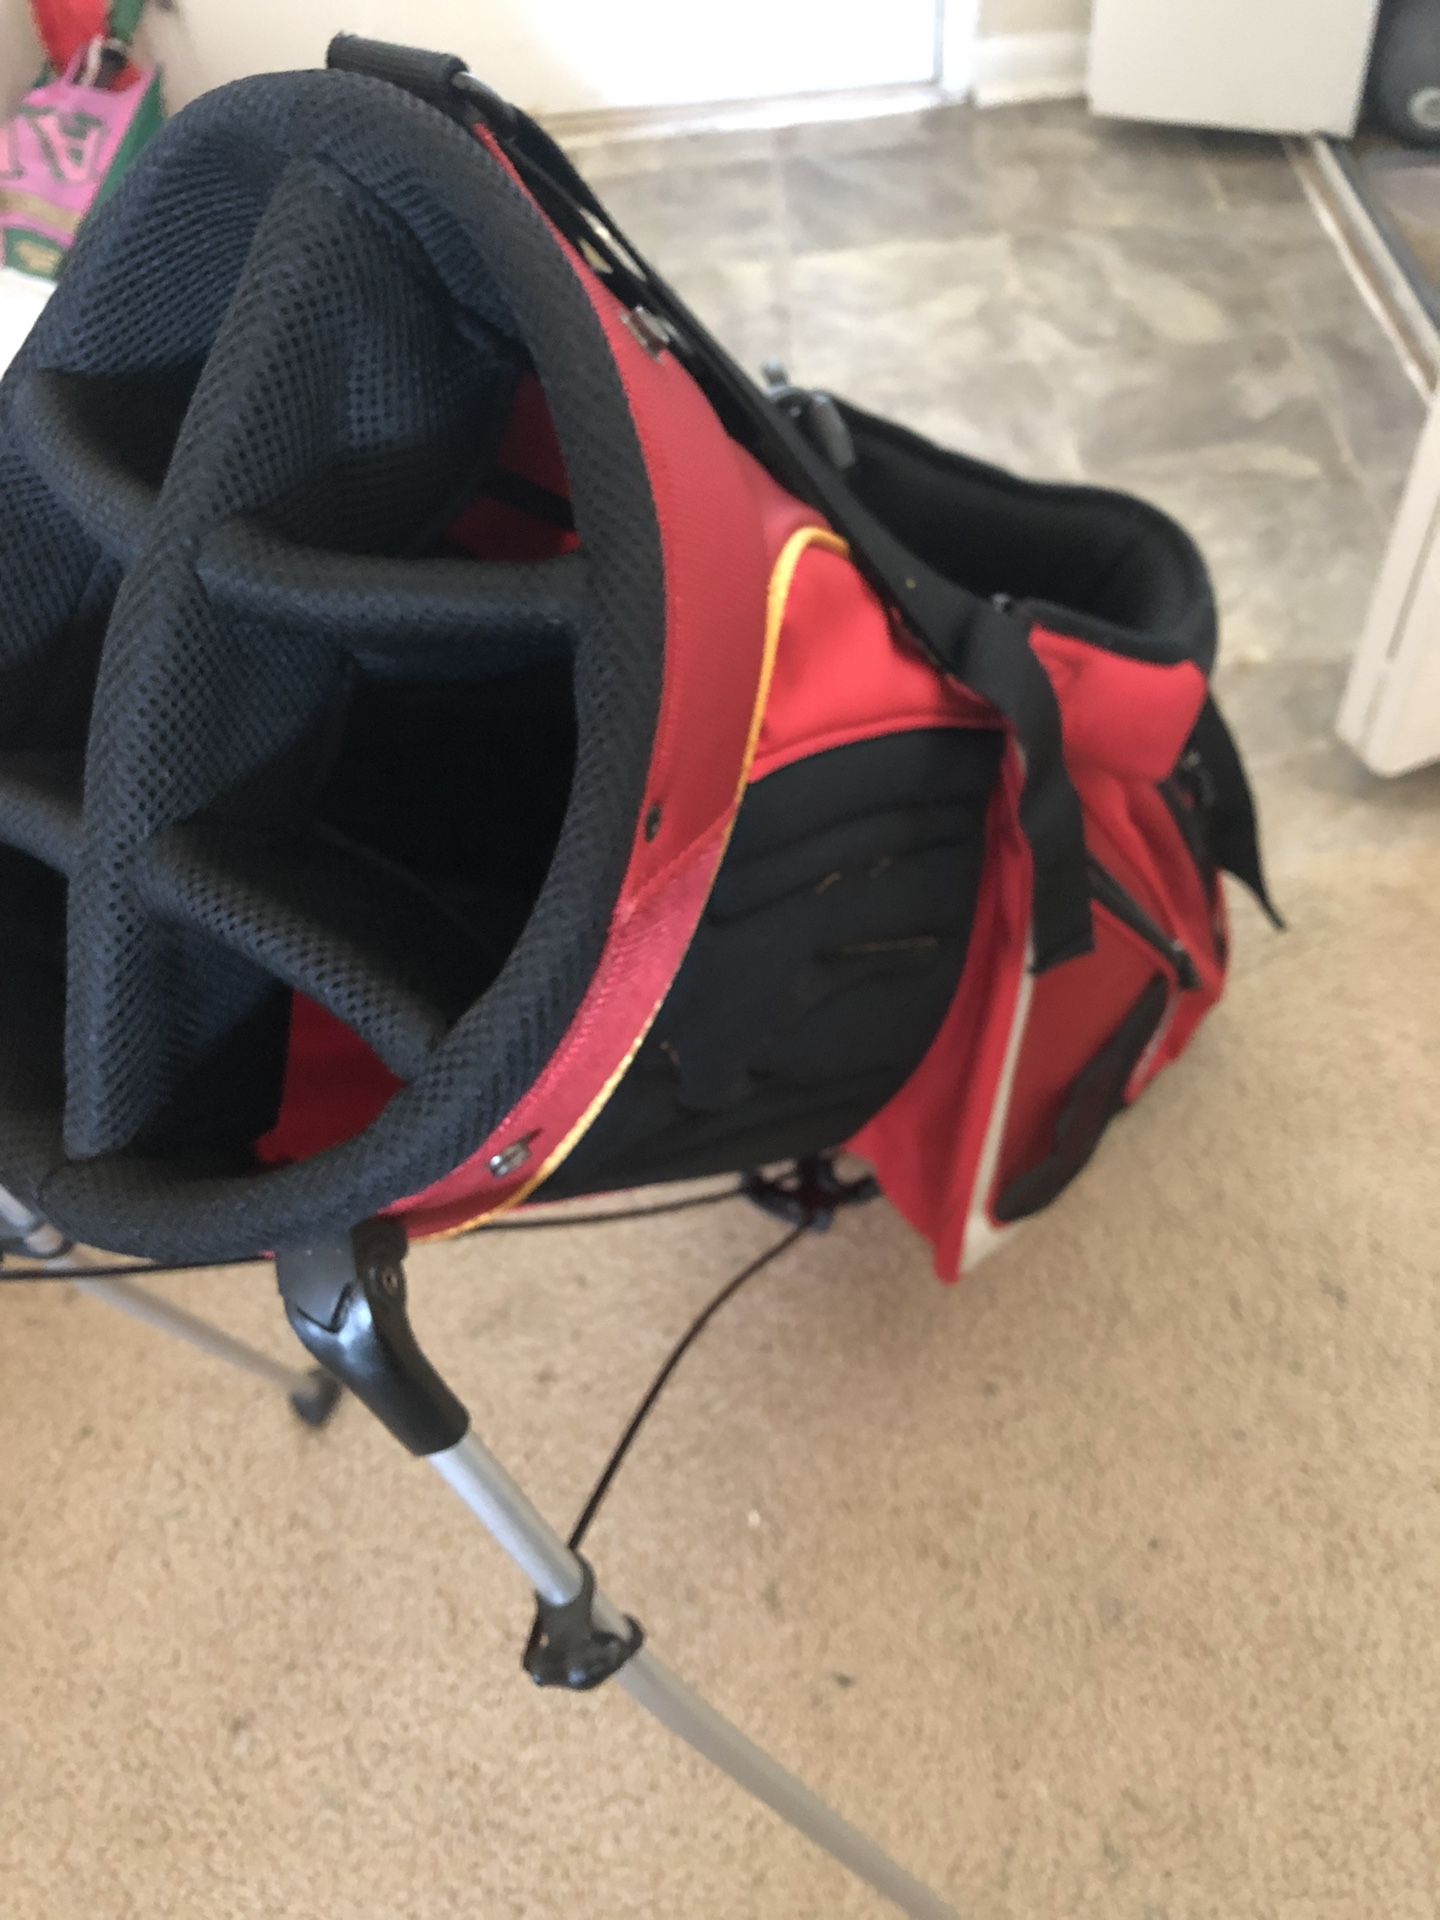 New Callaway golf bag